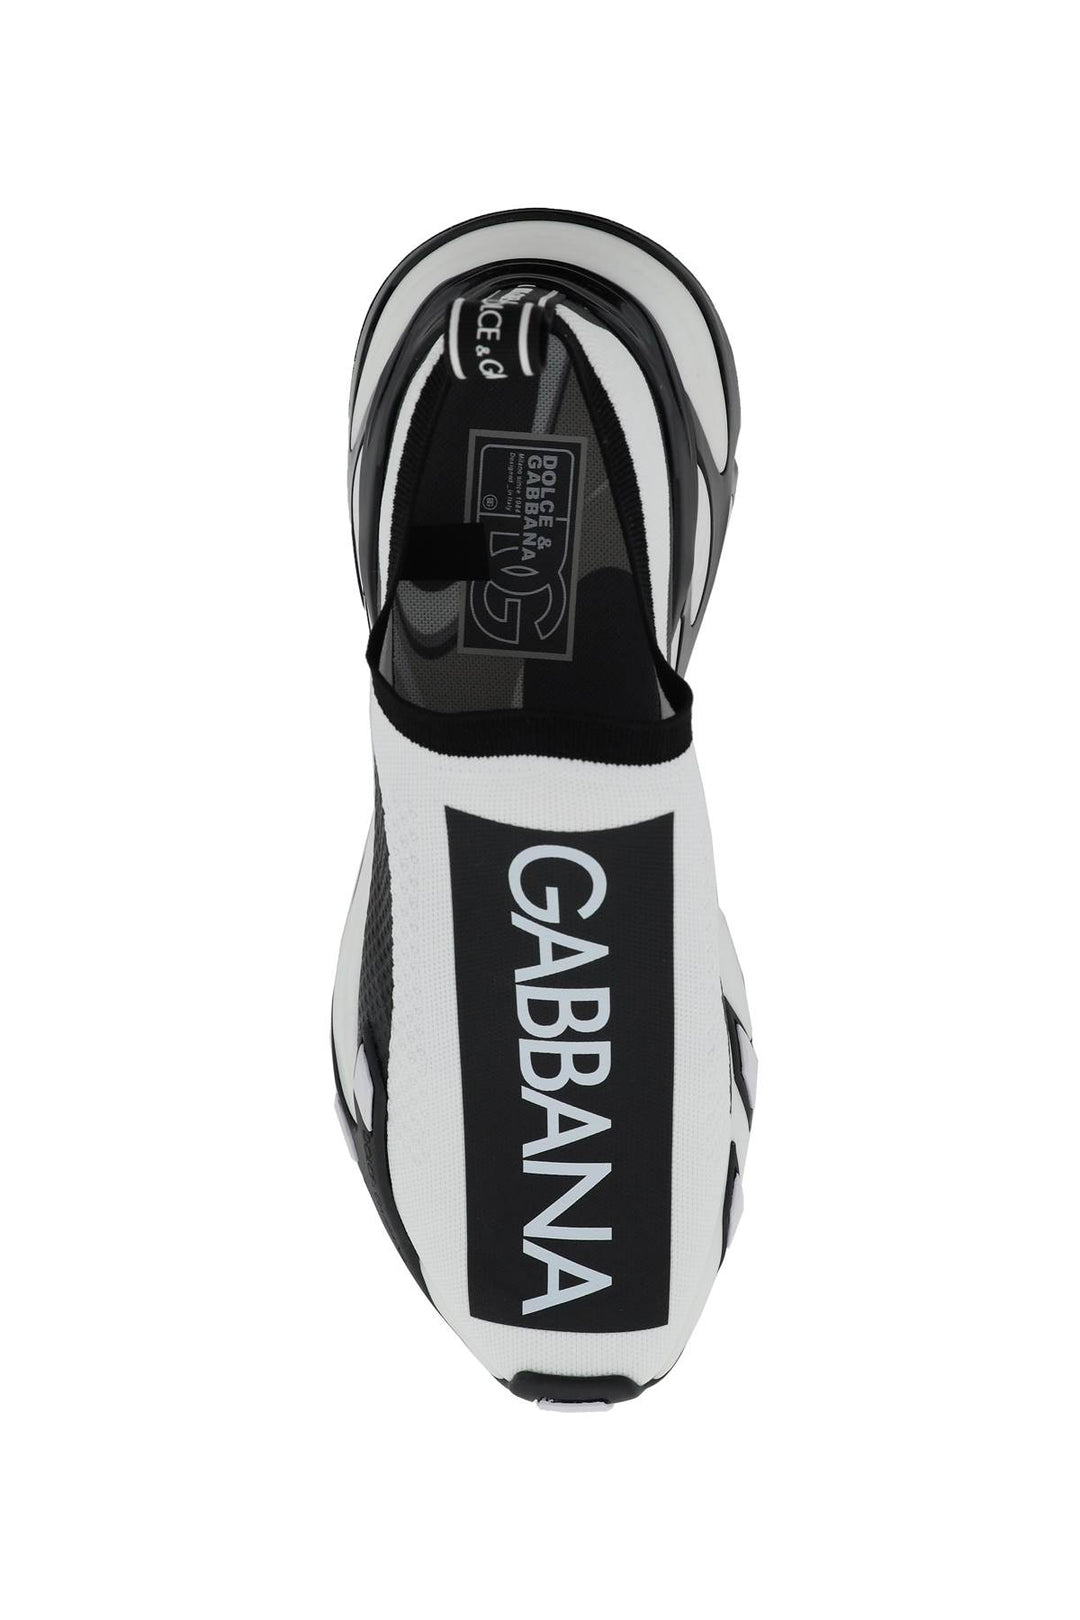 Dolce & Gabbana Sorrento Sneakers   White